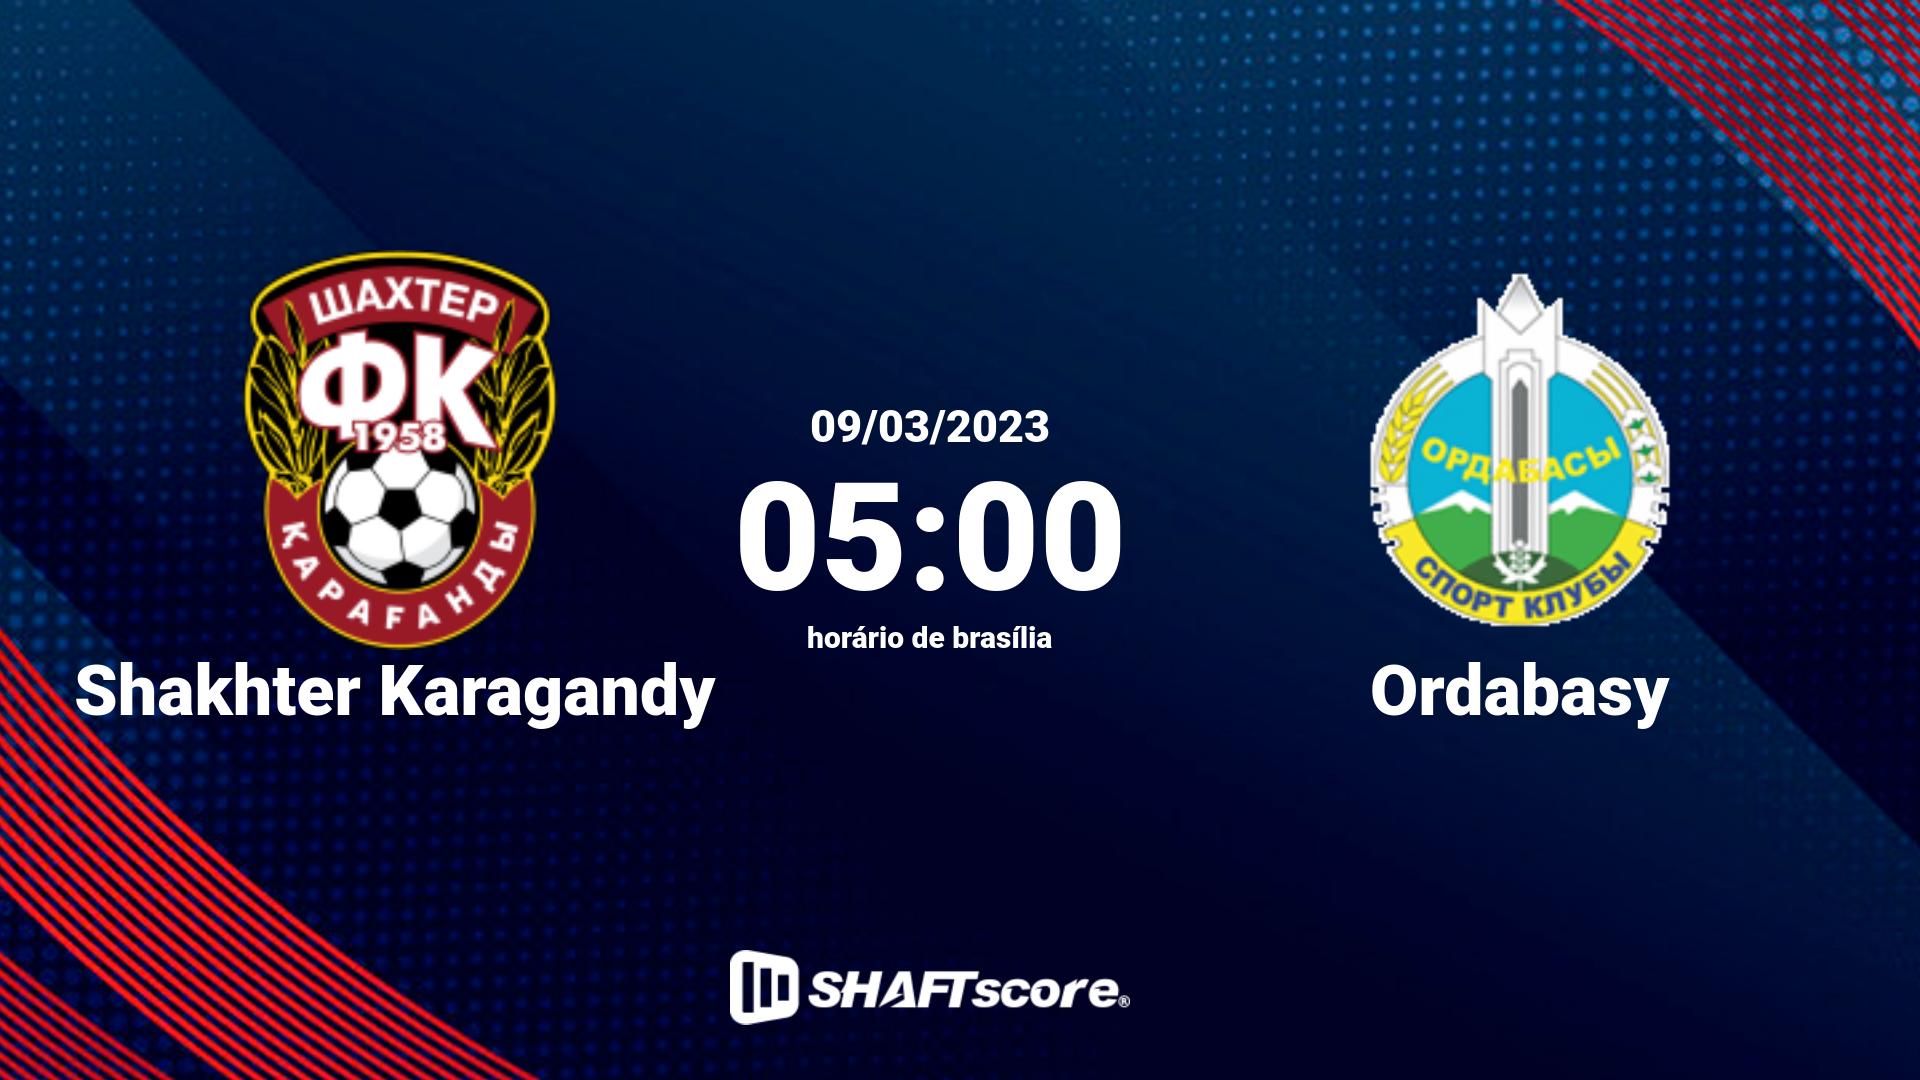 Estatísticas do jogo Shakhter Karagandy vs Ordabasy 09.03 05:00